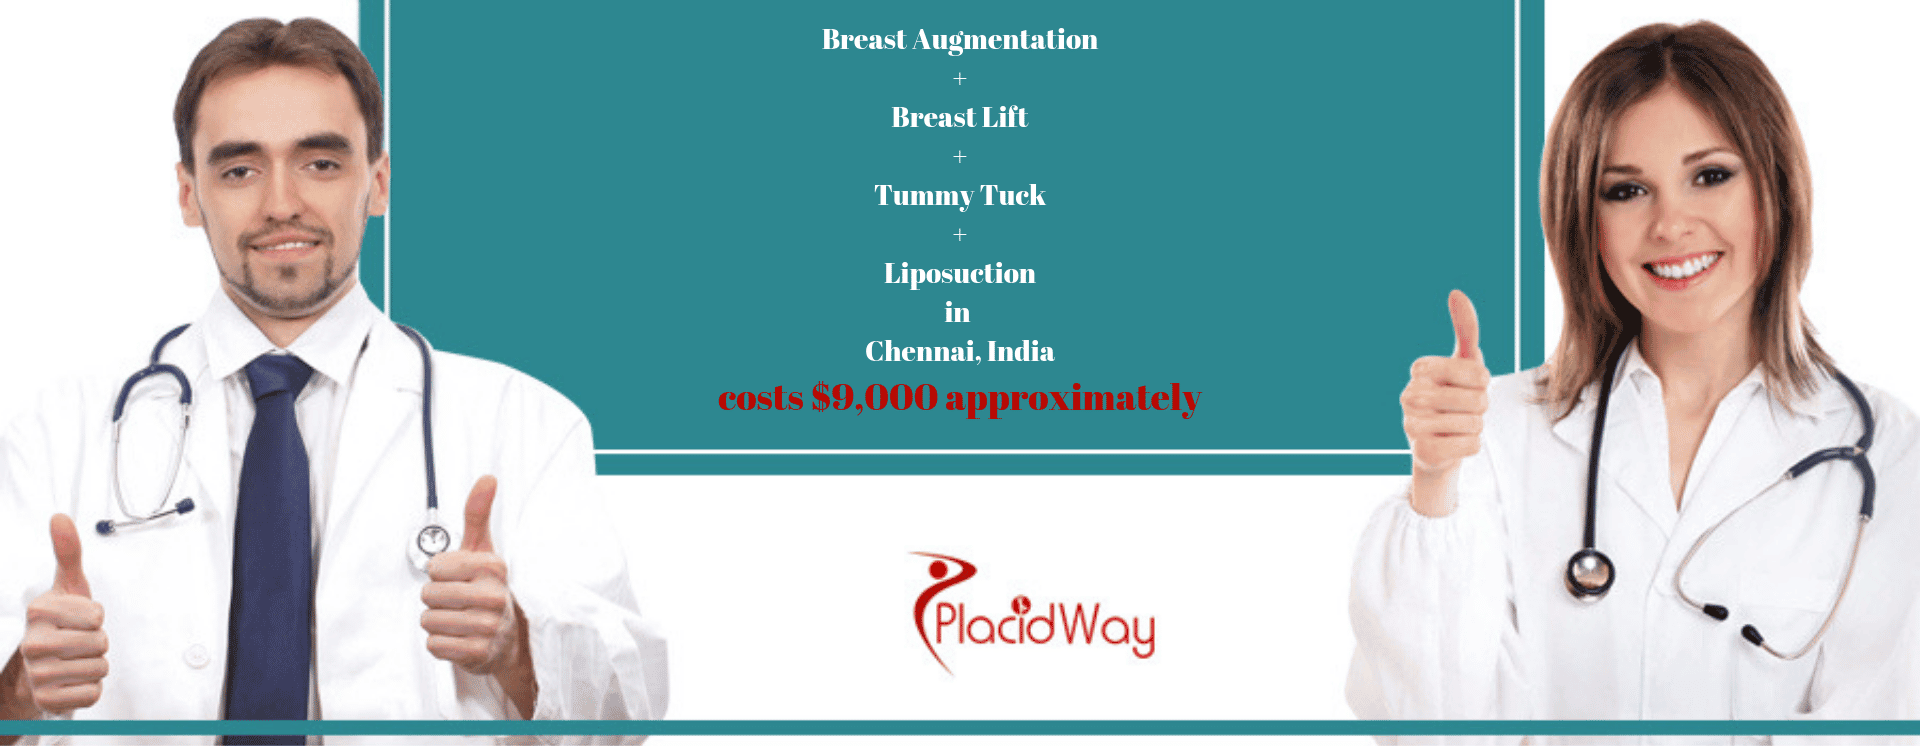 Breast Augmentation, Breat Lift, Tummy Tuck, Liposuction in Chennai, India Cost